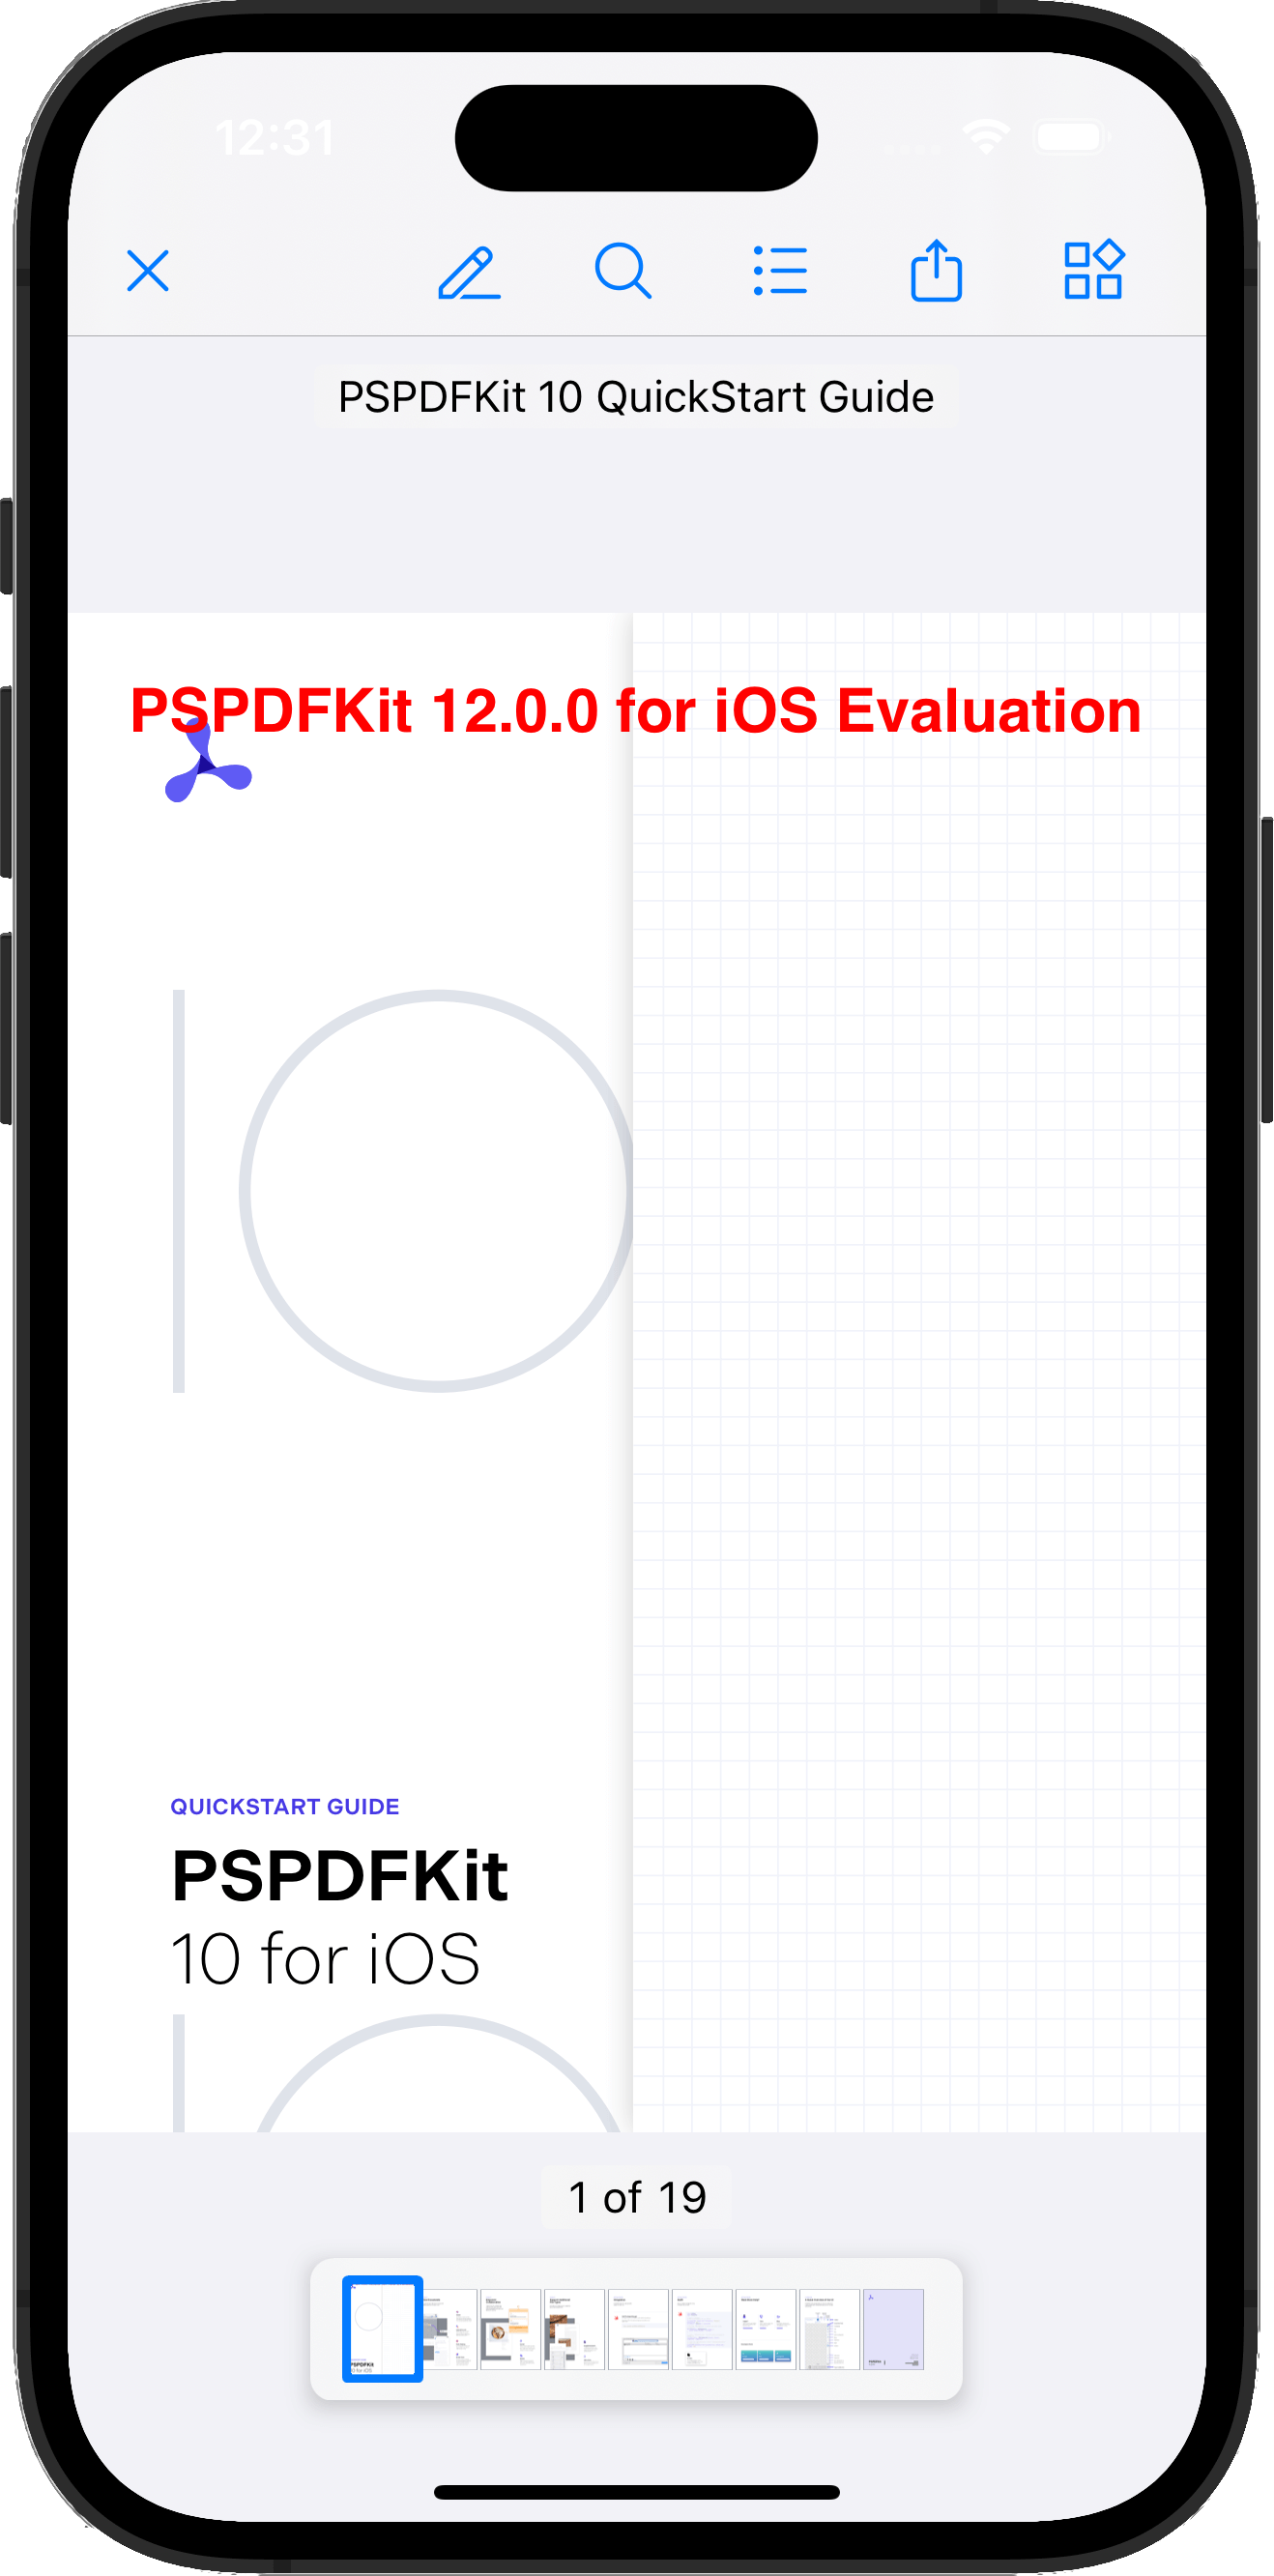 PSPDFKit on iOS